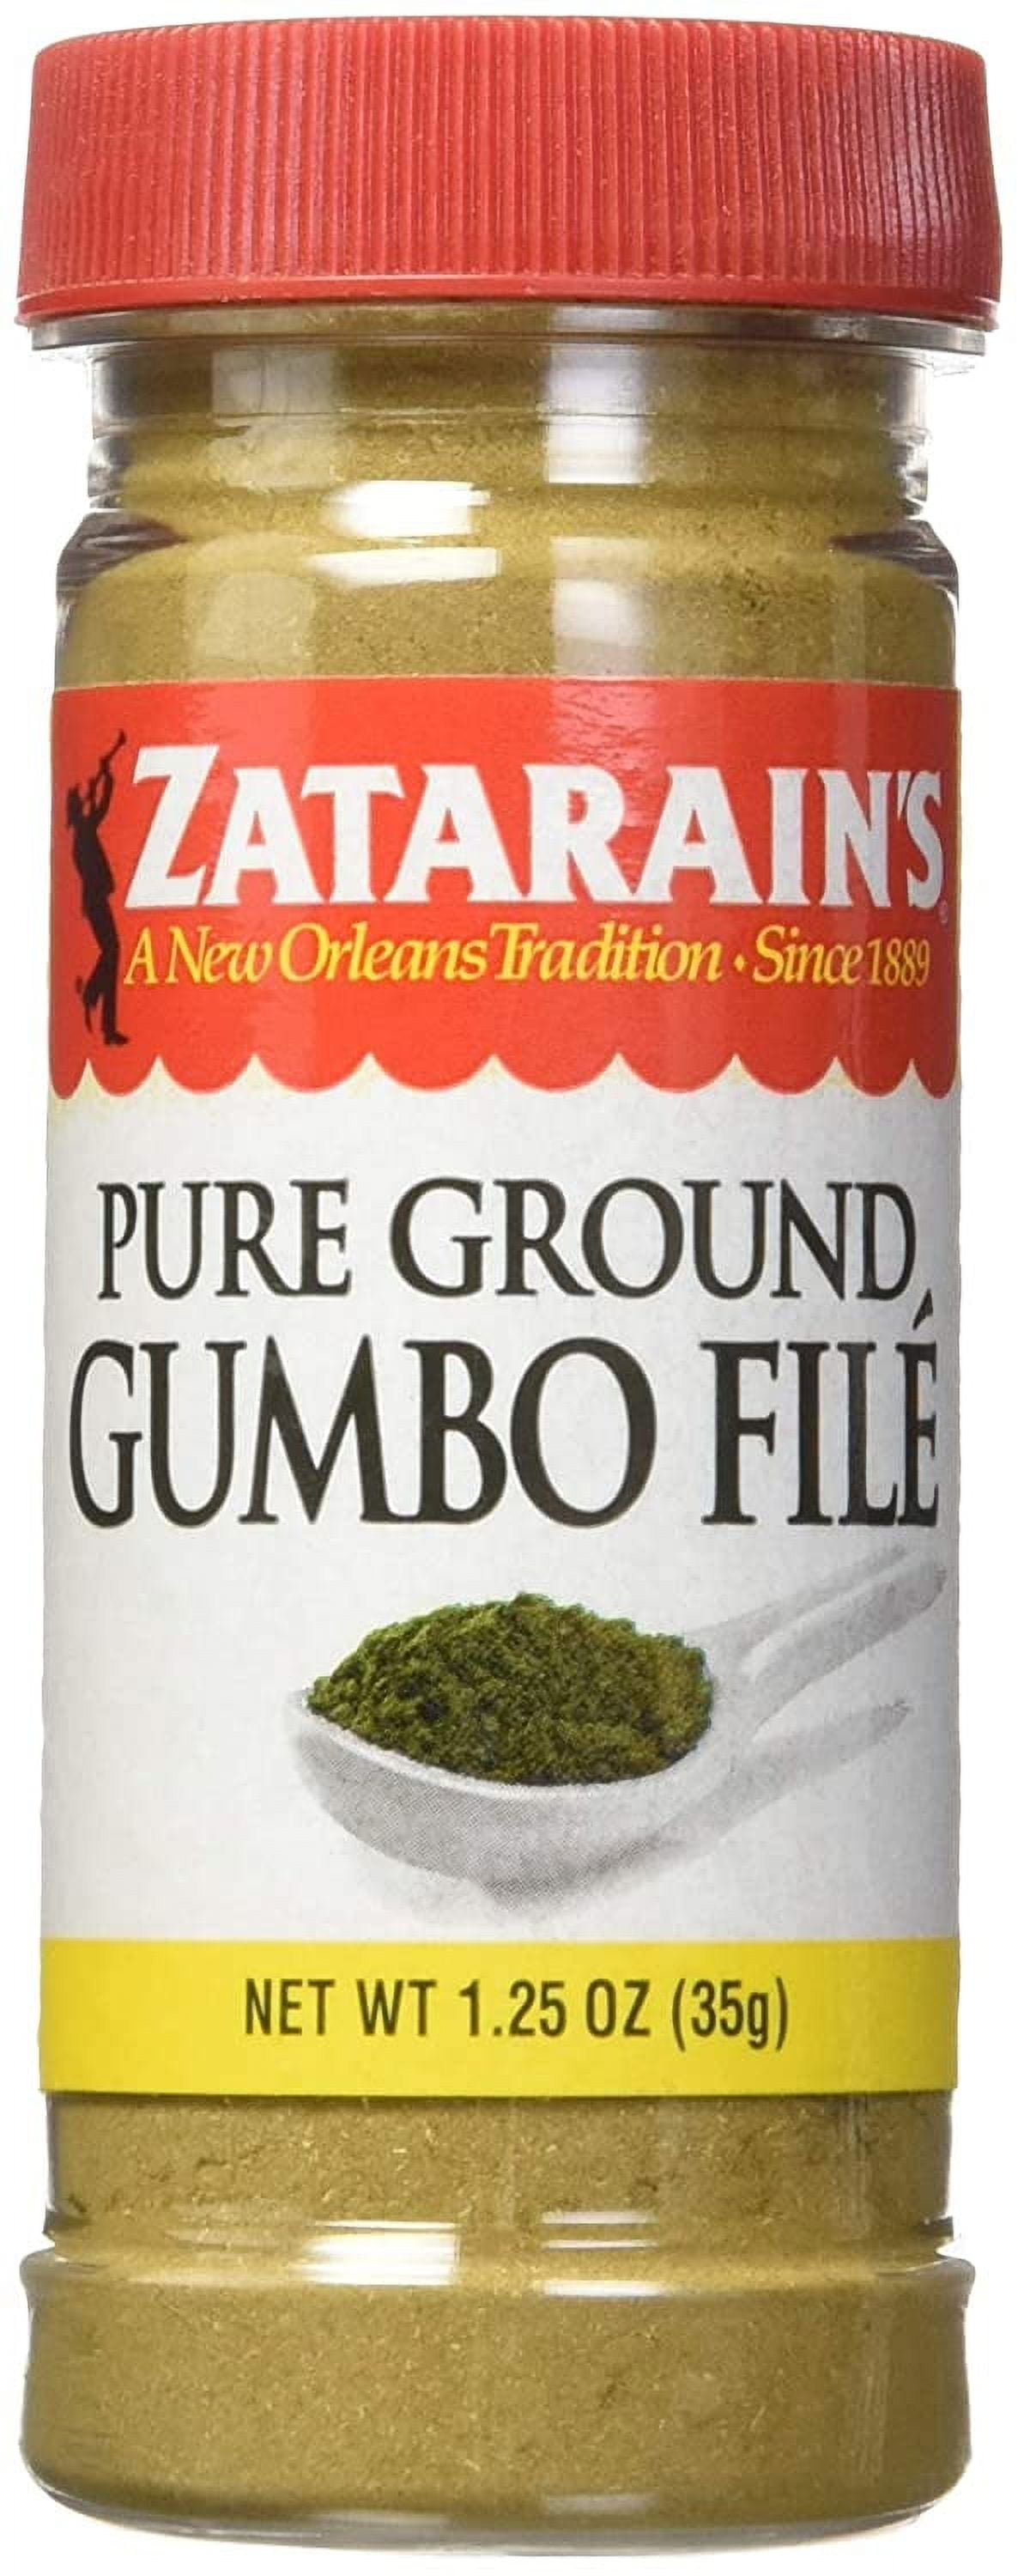 SPICES VILLAGE Gumbo File [ 4 oz ] - Gumbo File Seasoning, Ground Sassafras  Tree Leaves, Filé Powder - Kosher, Gluten Free, Non GMO, Resealable Bulk